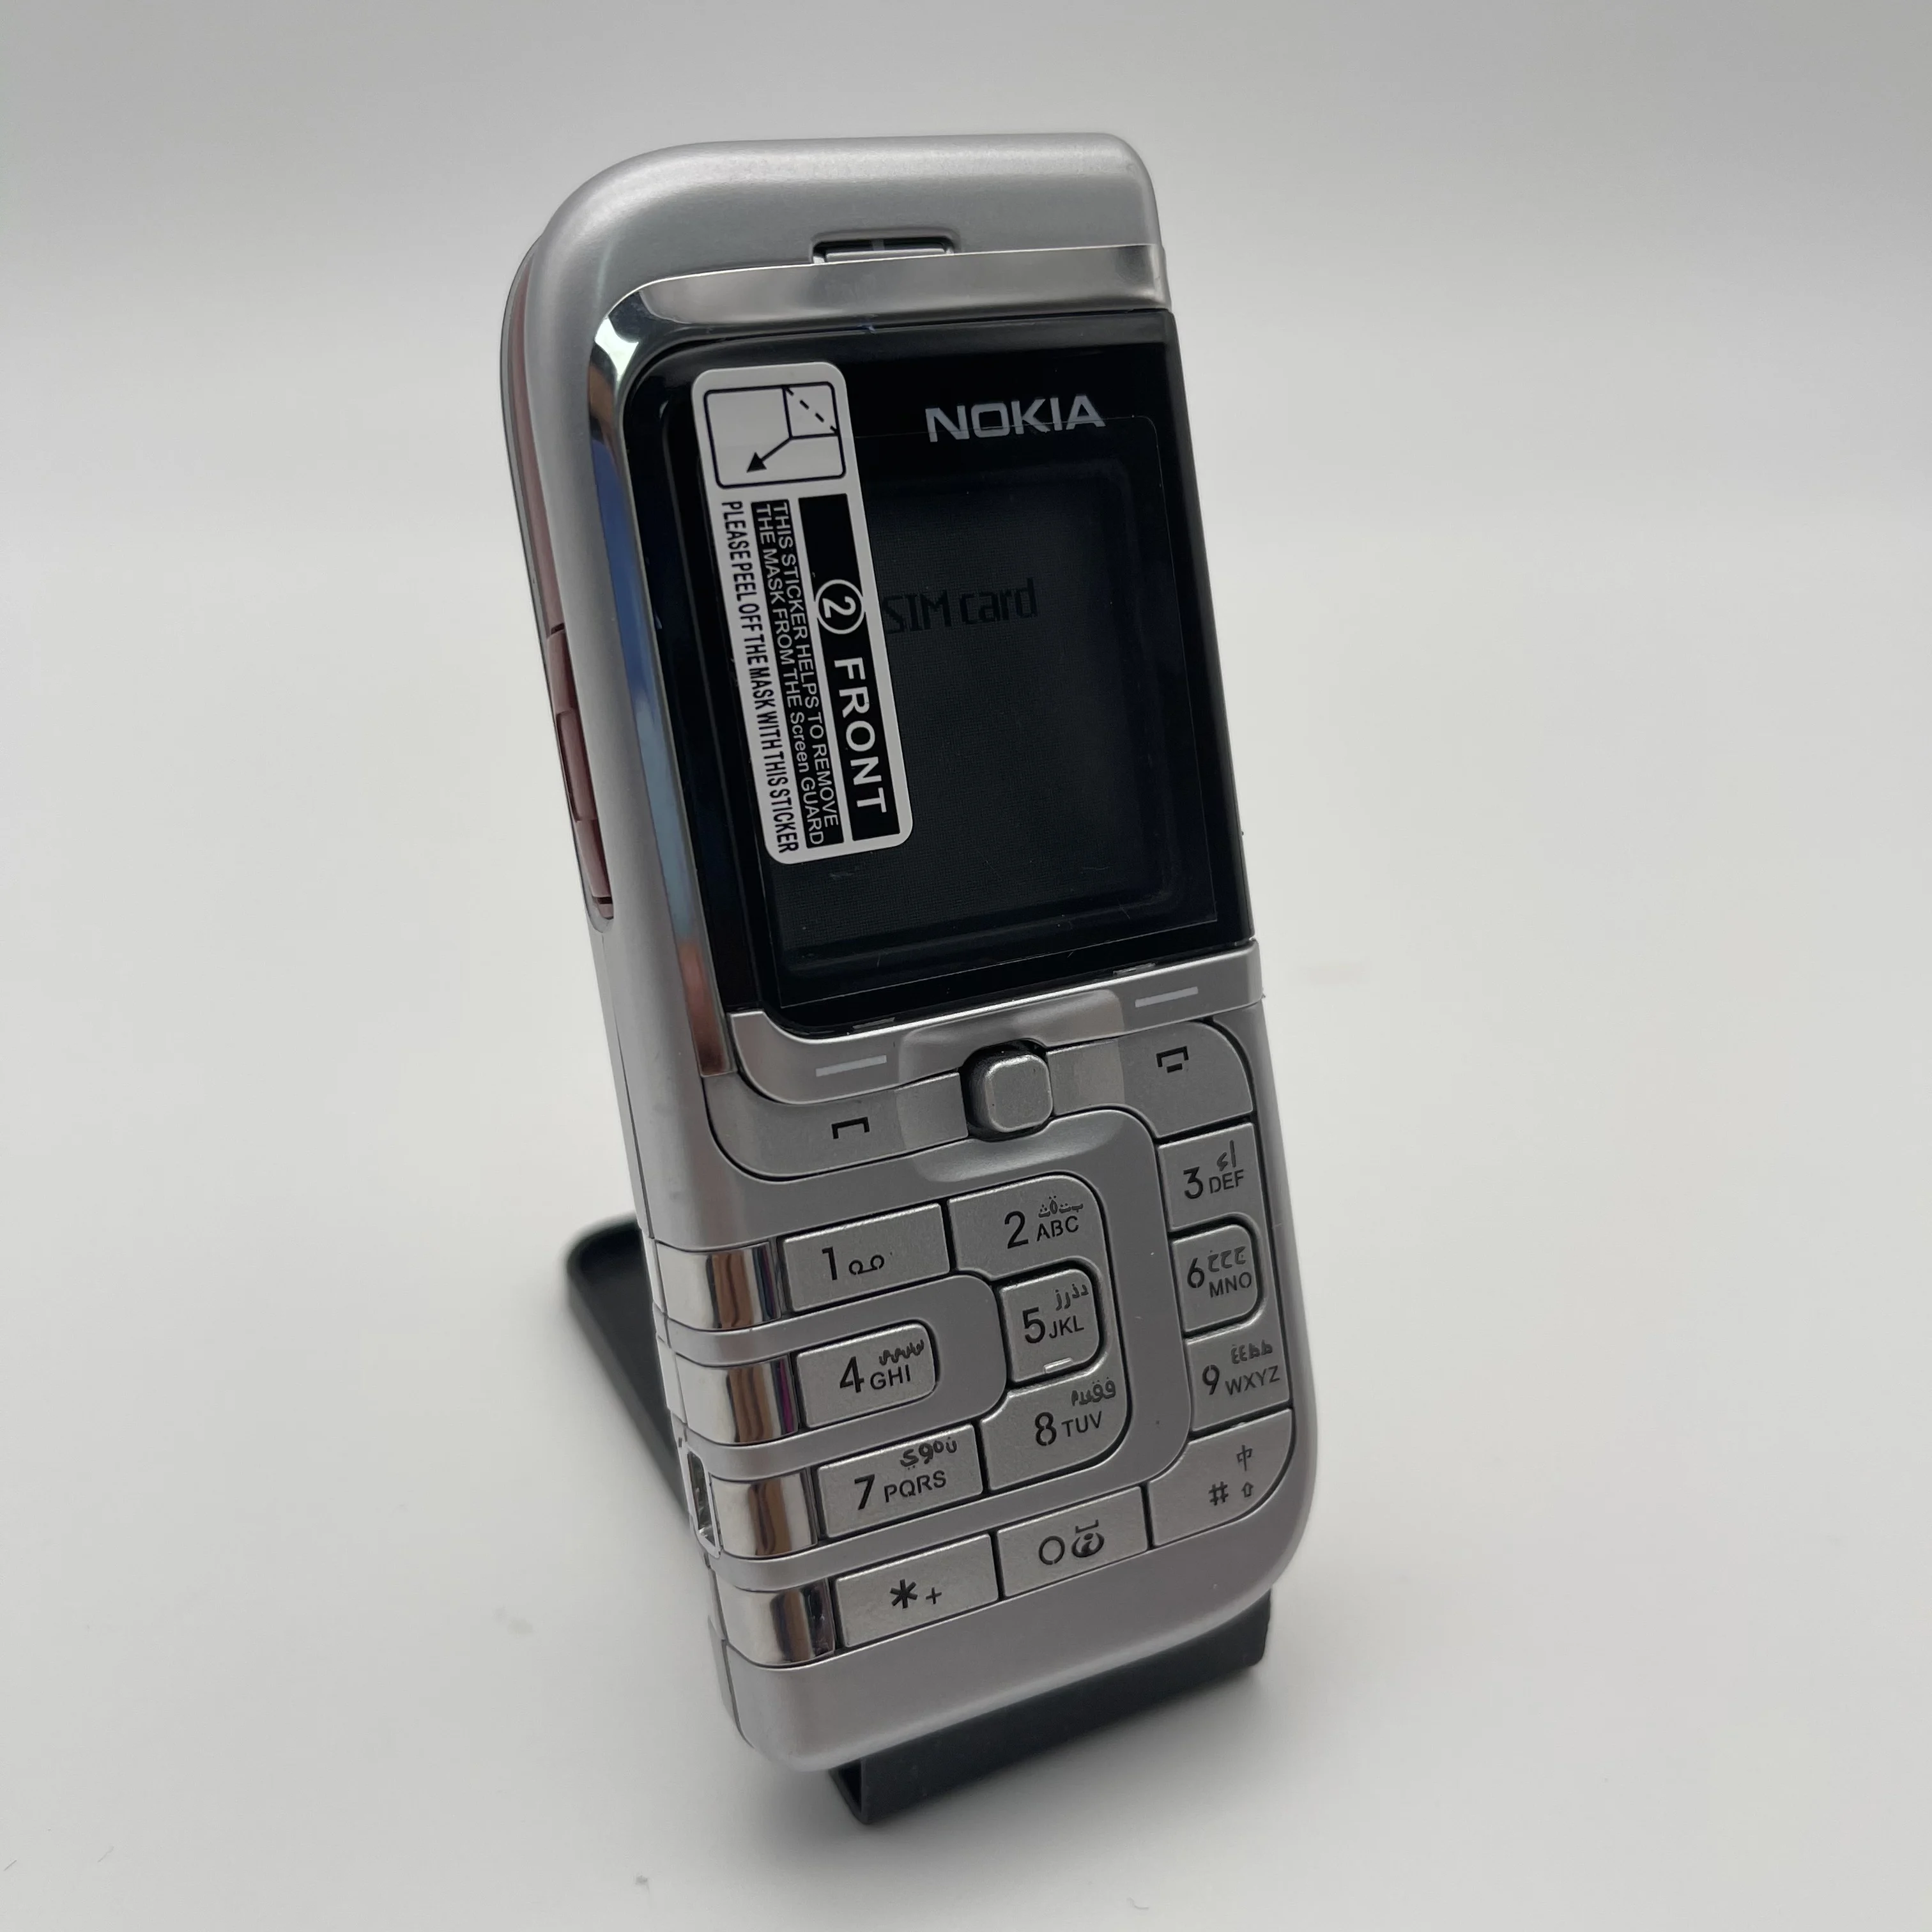 nokia 7260 refurbished original nokia 7260 mobile phone old cheap phone gold color refurbished free global shipping